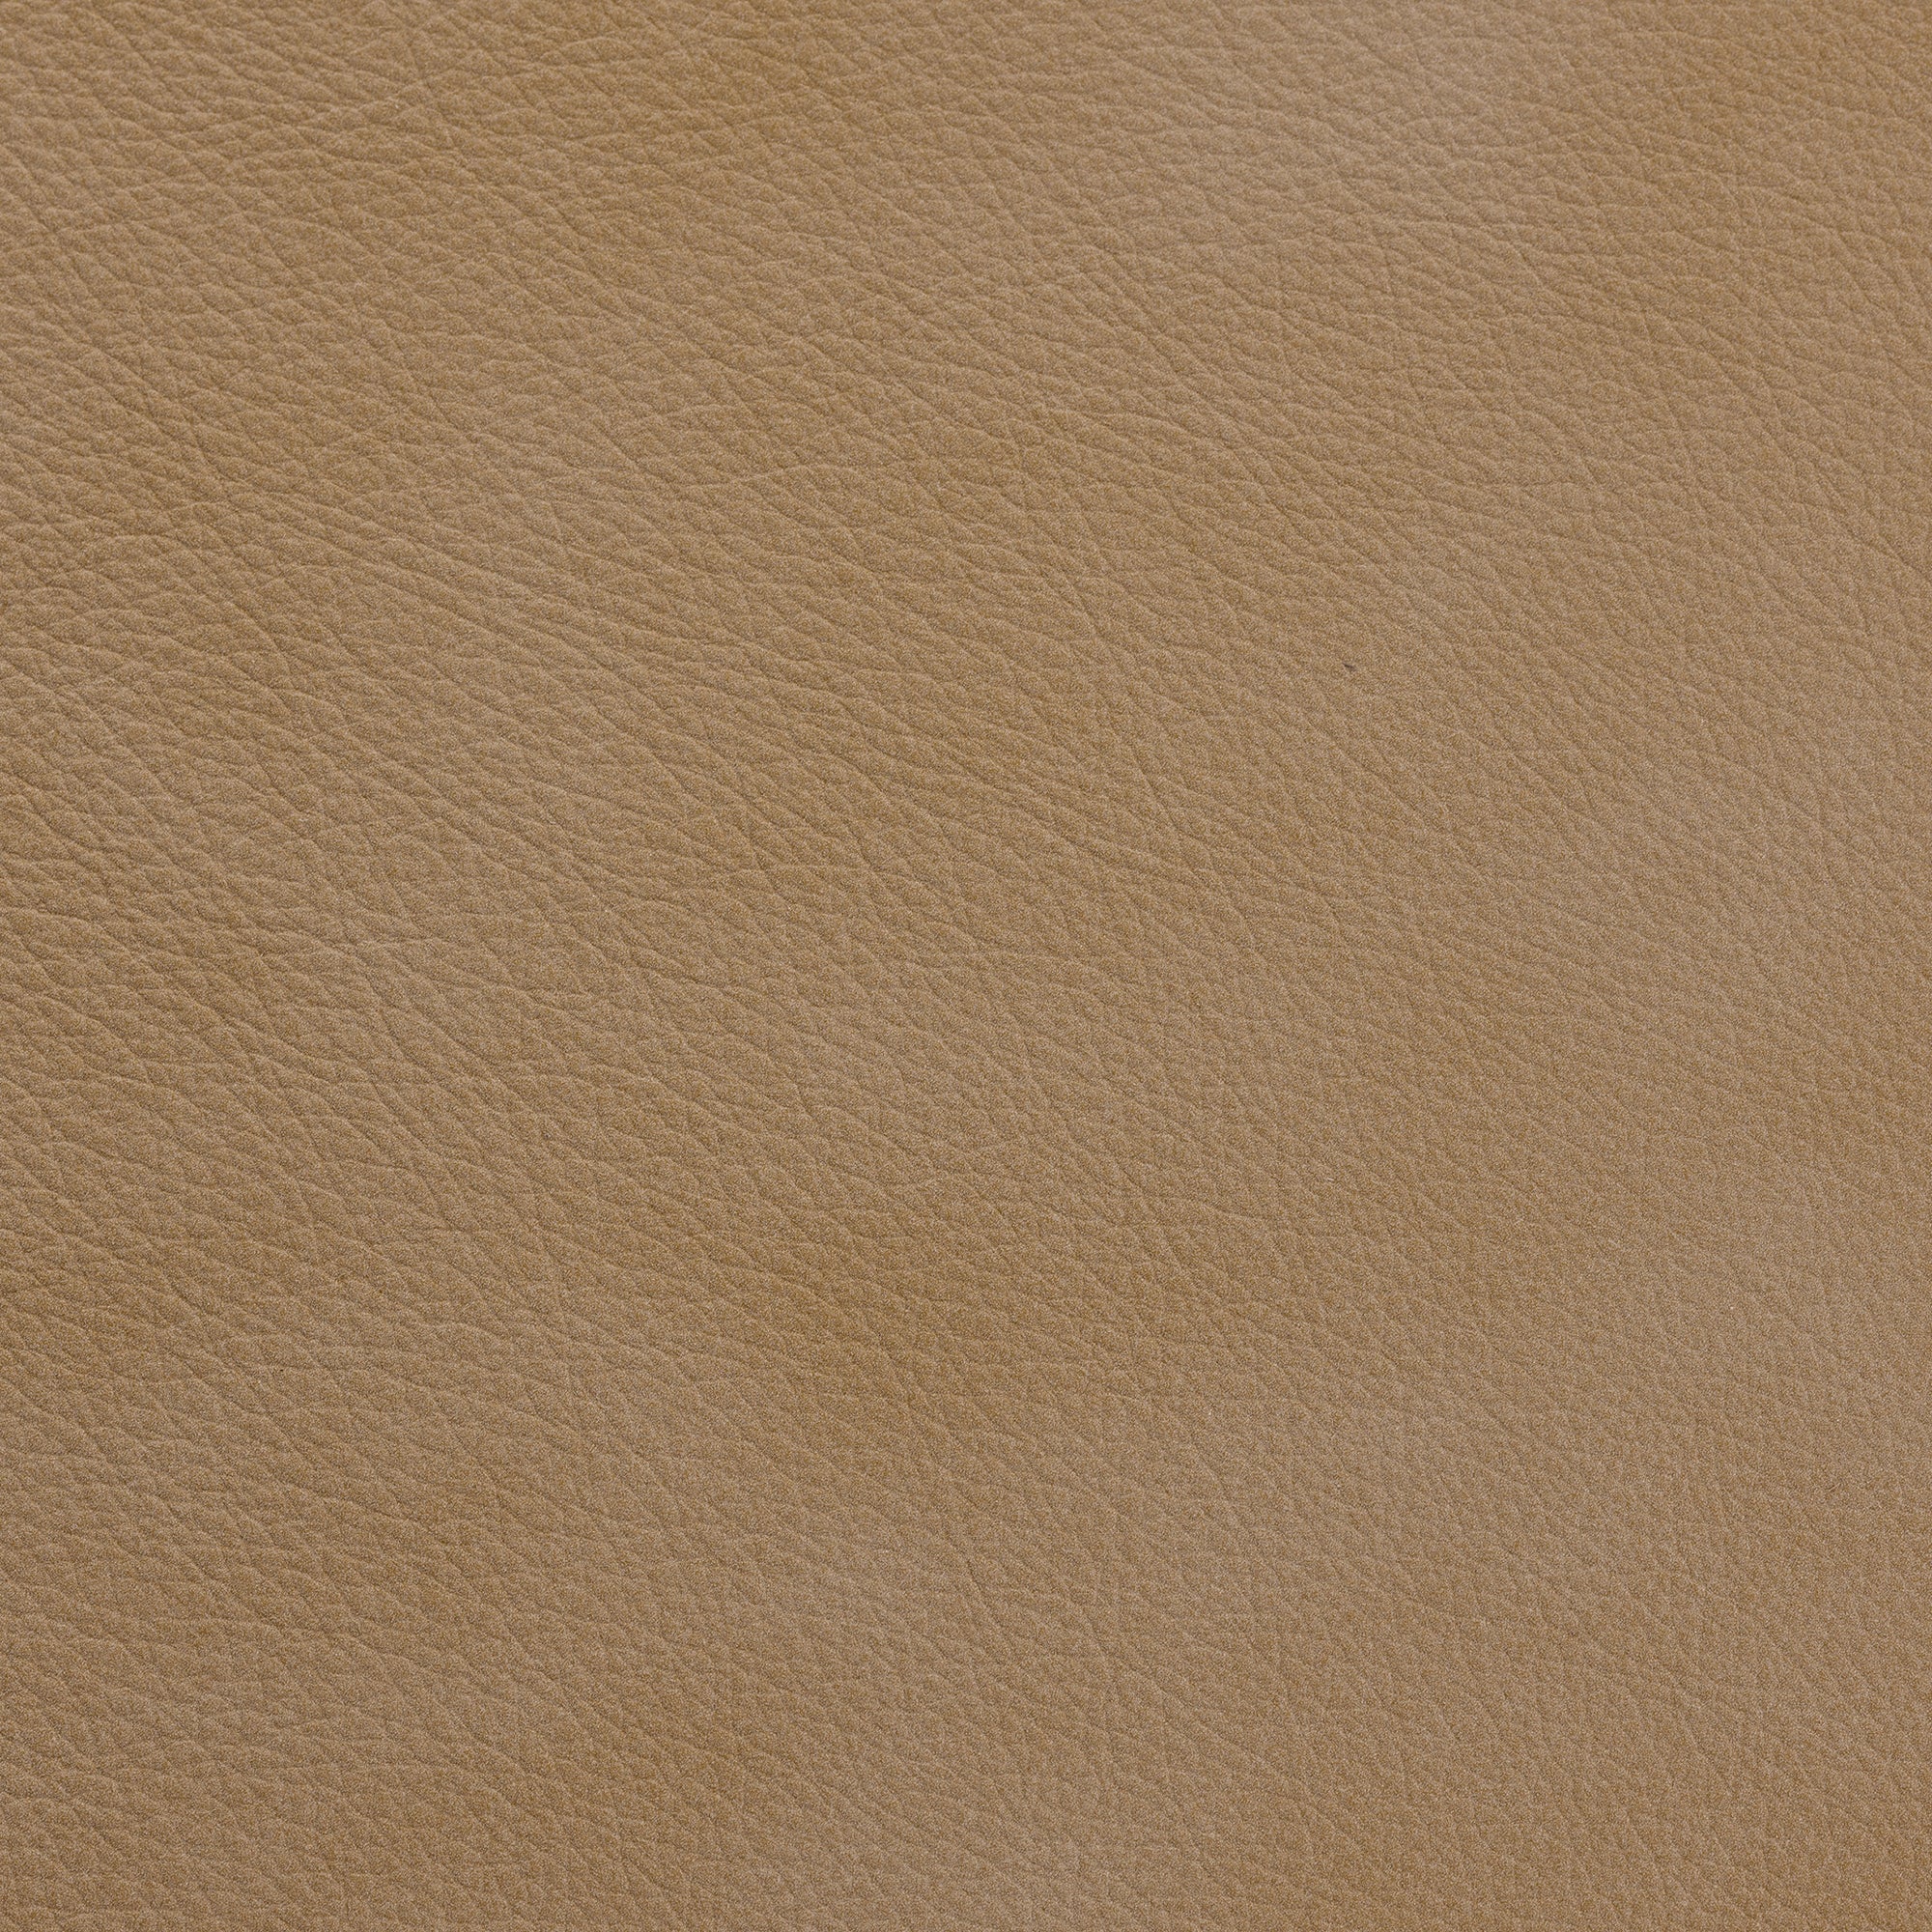 Marzipan Nubuck Leather -  Swatch